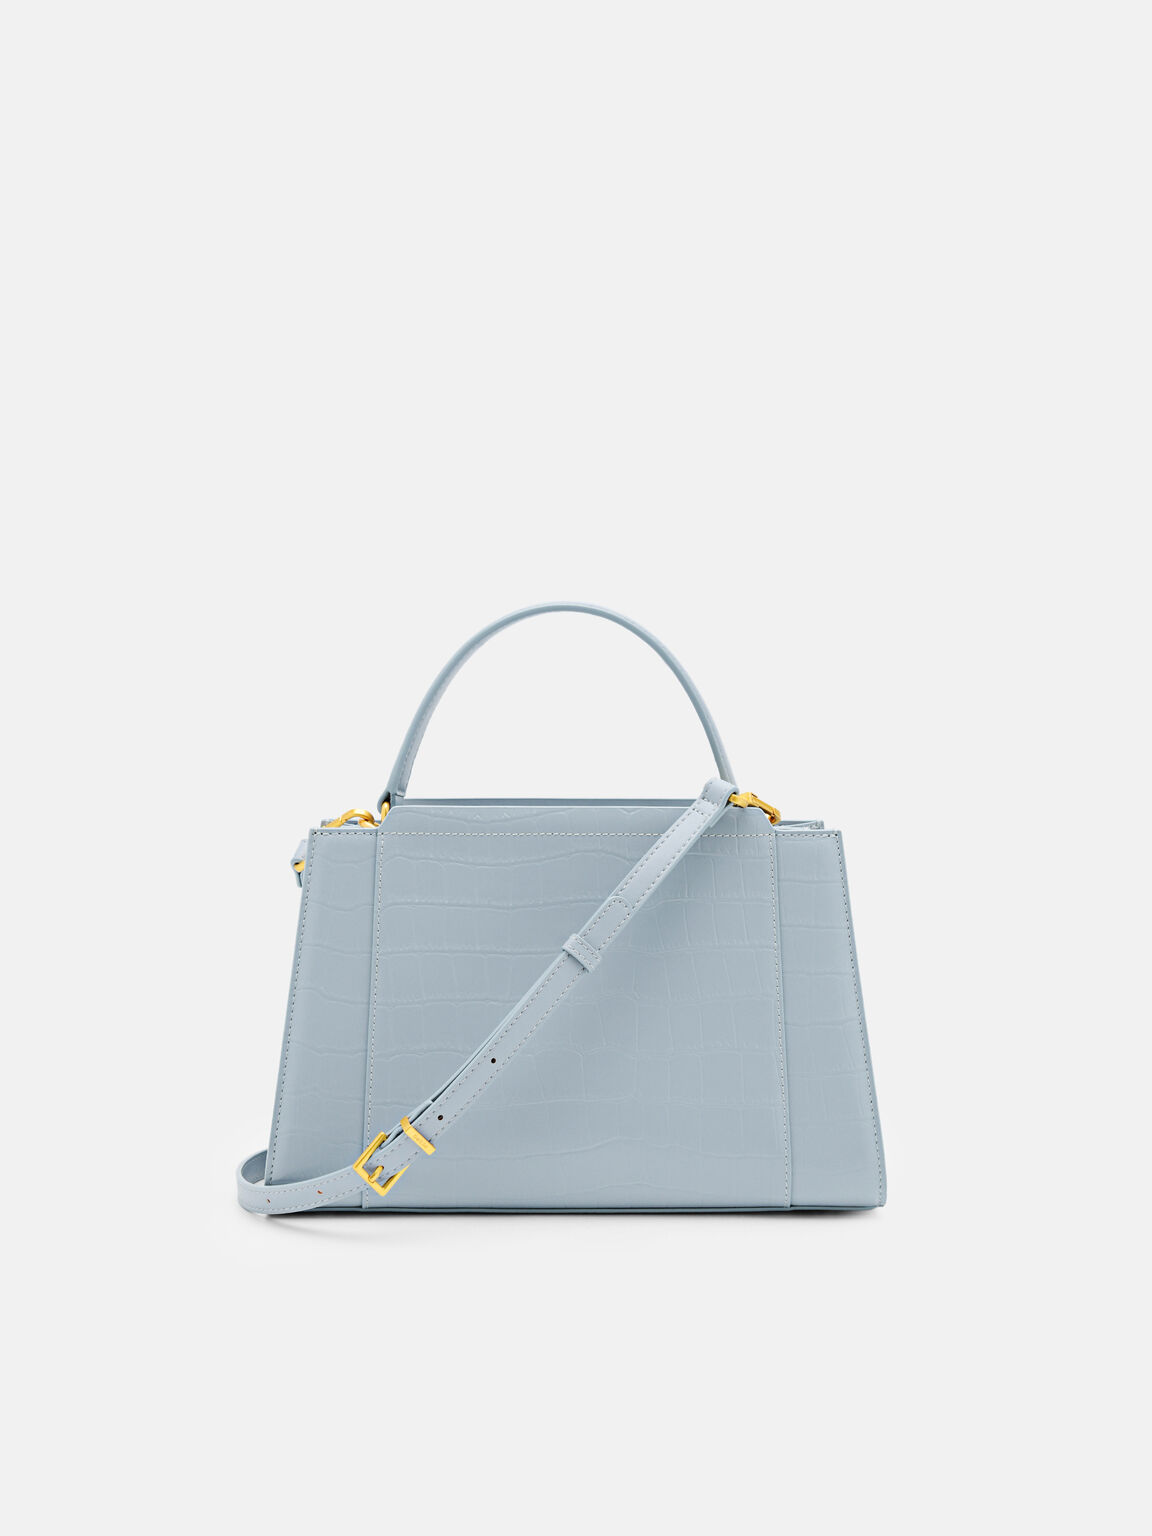 PEDRO Studio Ida Leather Handbag, Slate Blue, hi-res